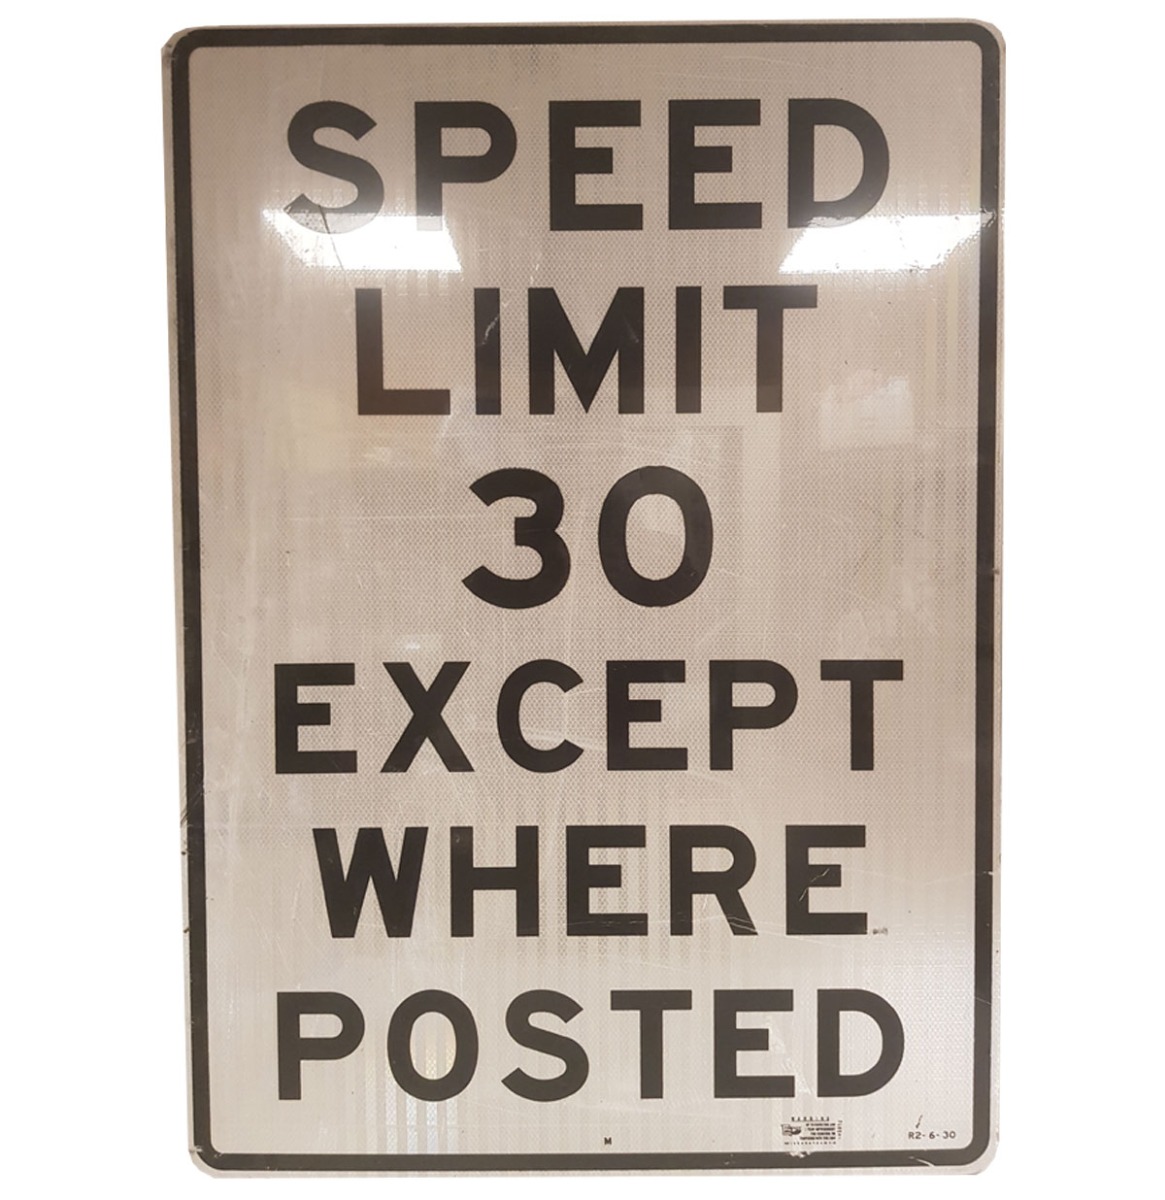 Speed Limit 30 Except Where Posted Straatbord - Origineel